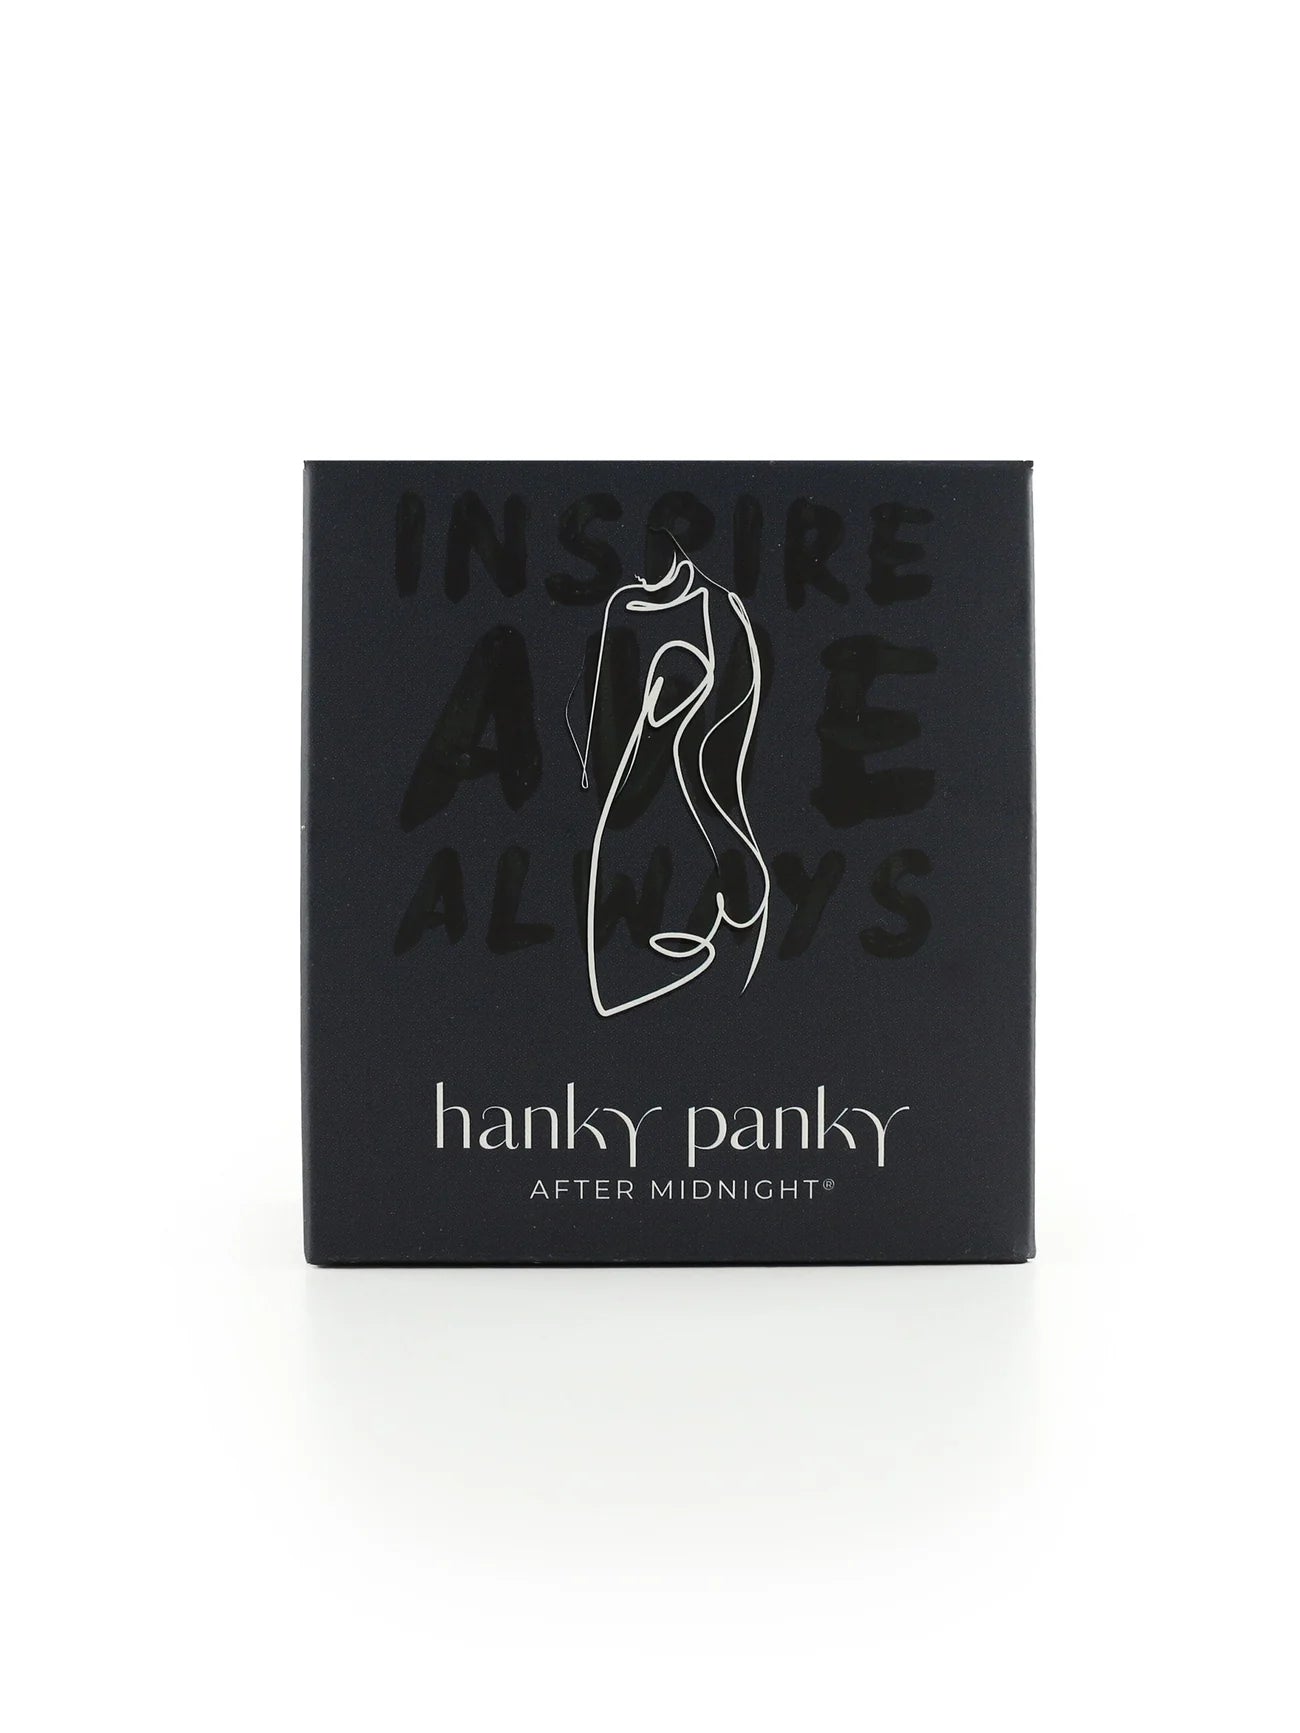 Hanky Panky "Naughty & Nice" Boxed Set - My Filosophy